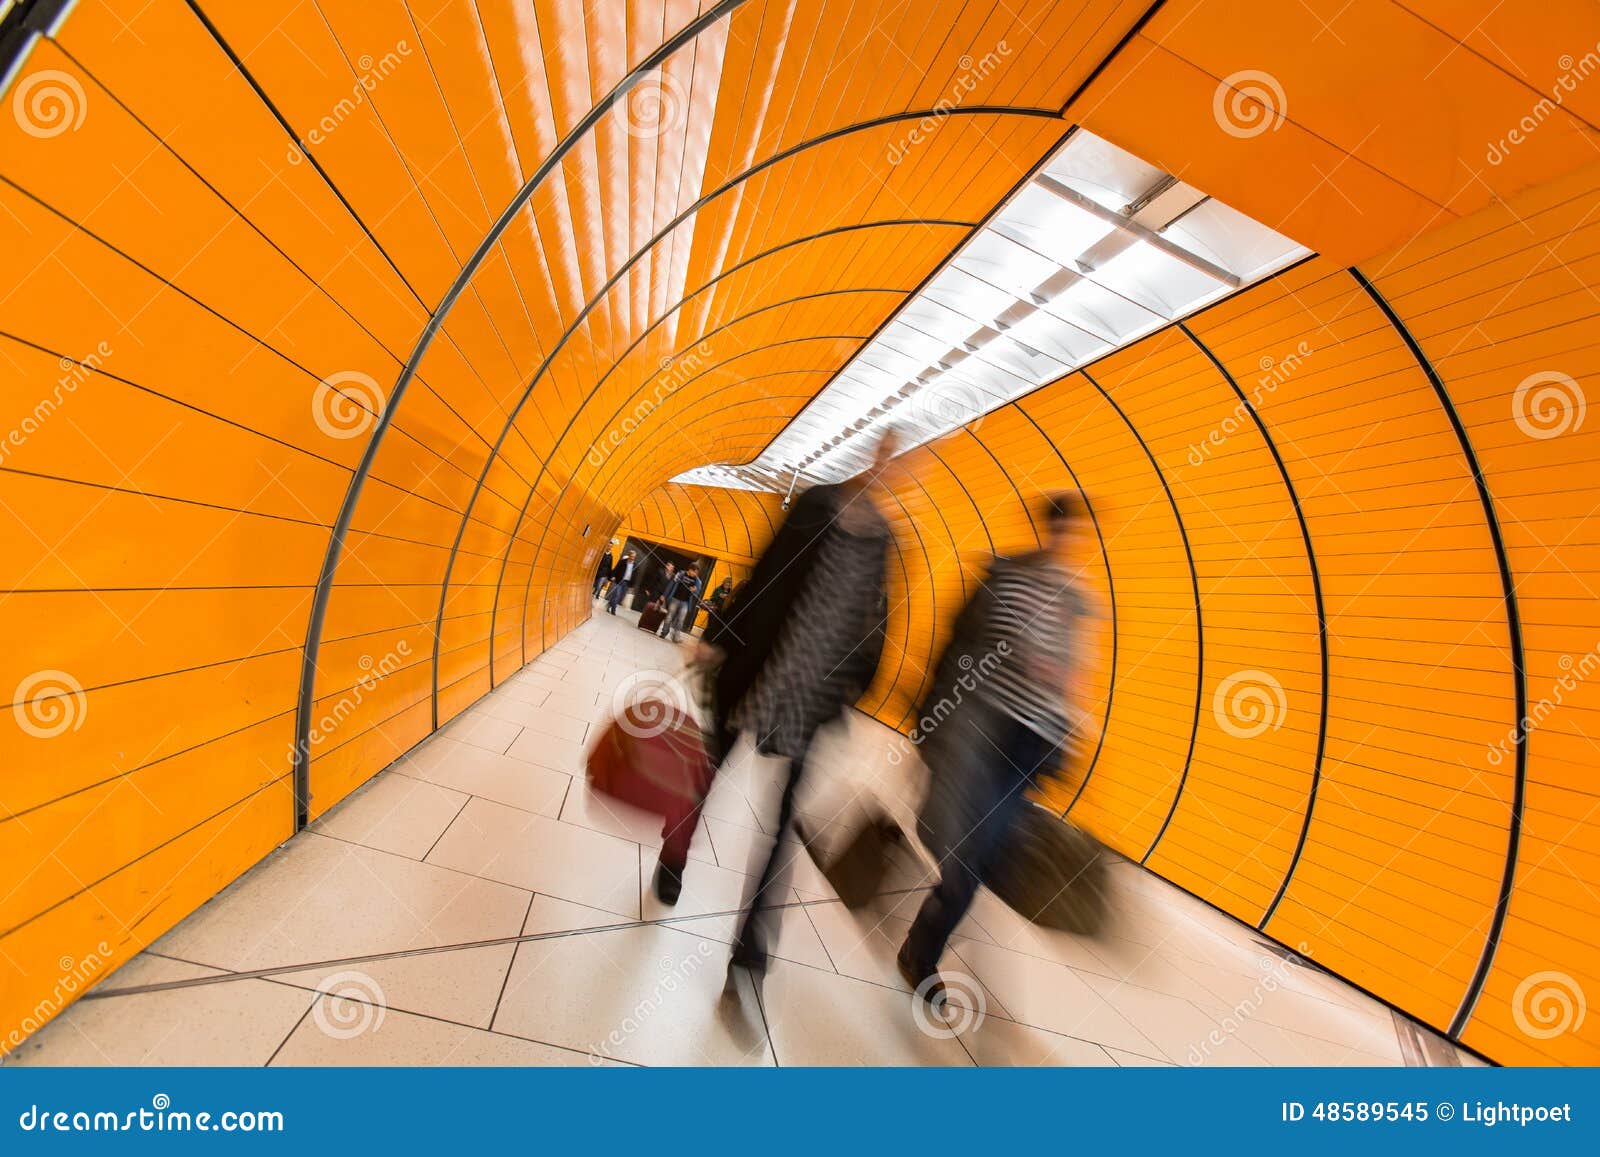 people rushing through a subway corridor